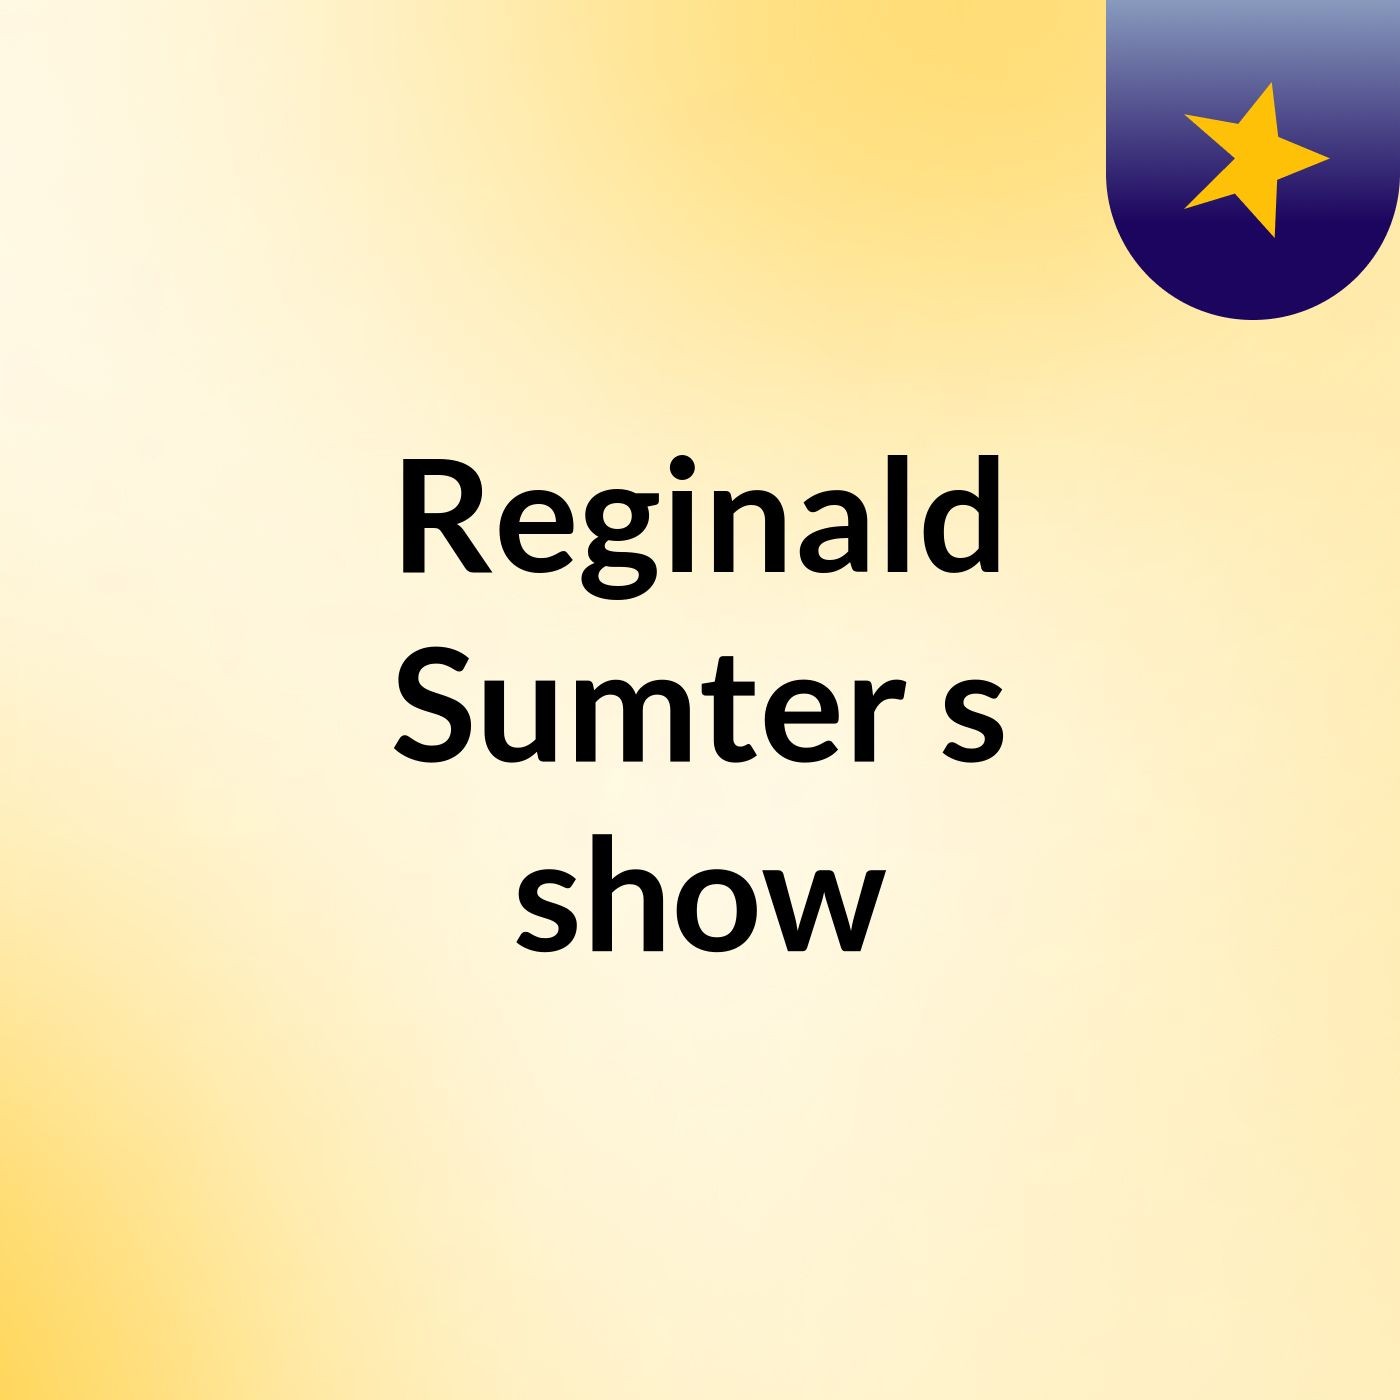 Reginald Sumter's show